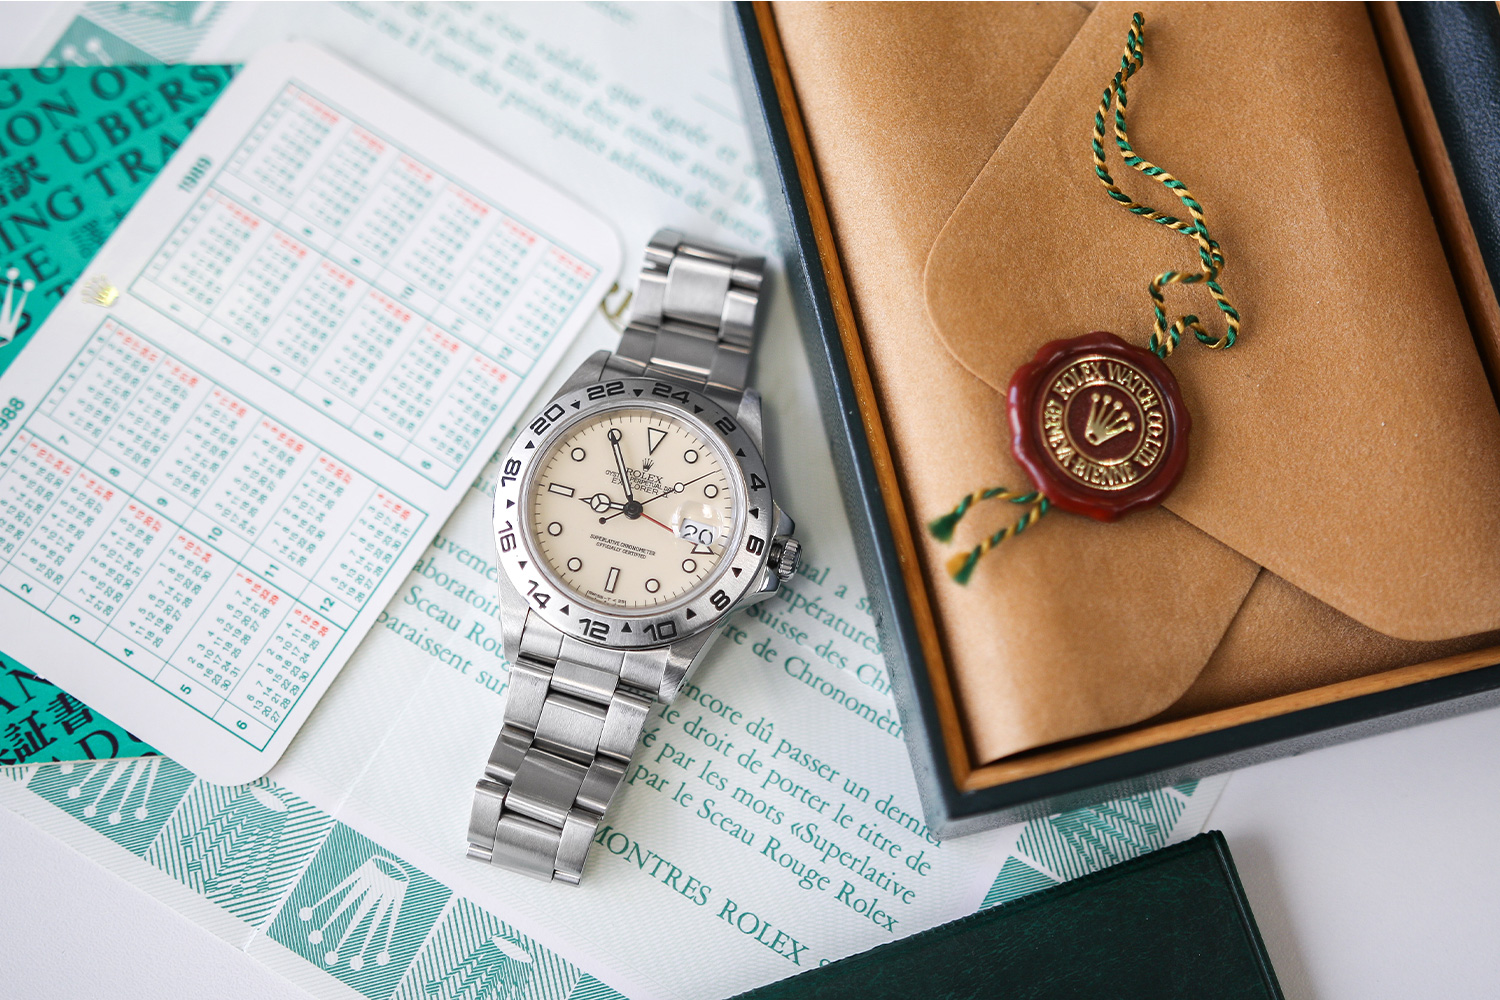 Lot 884 – Rolex Explorer II with a “cream” dial